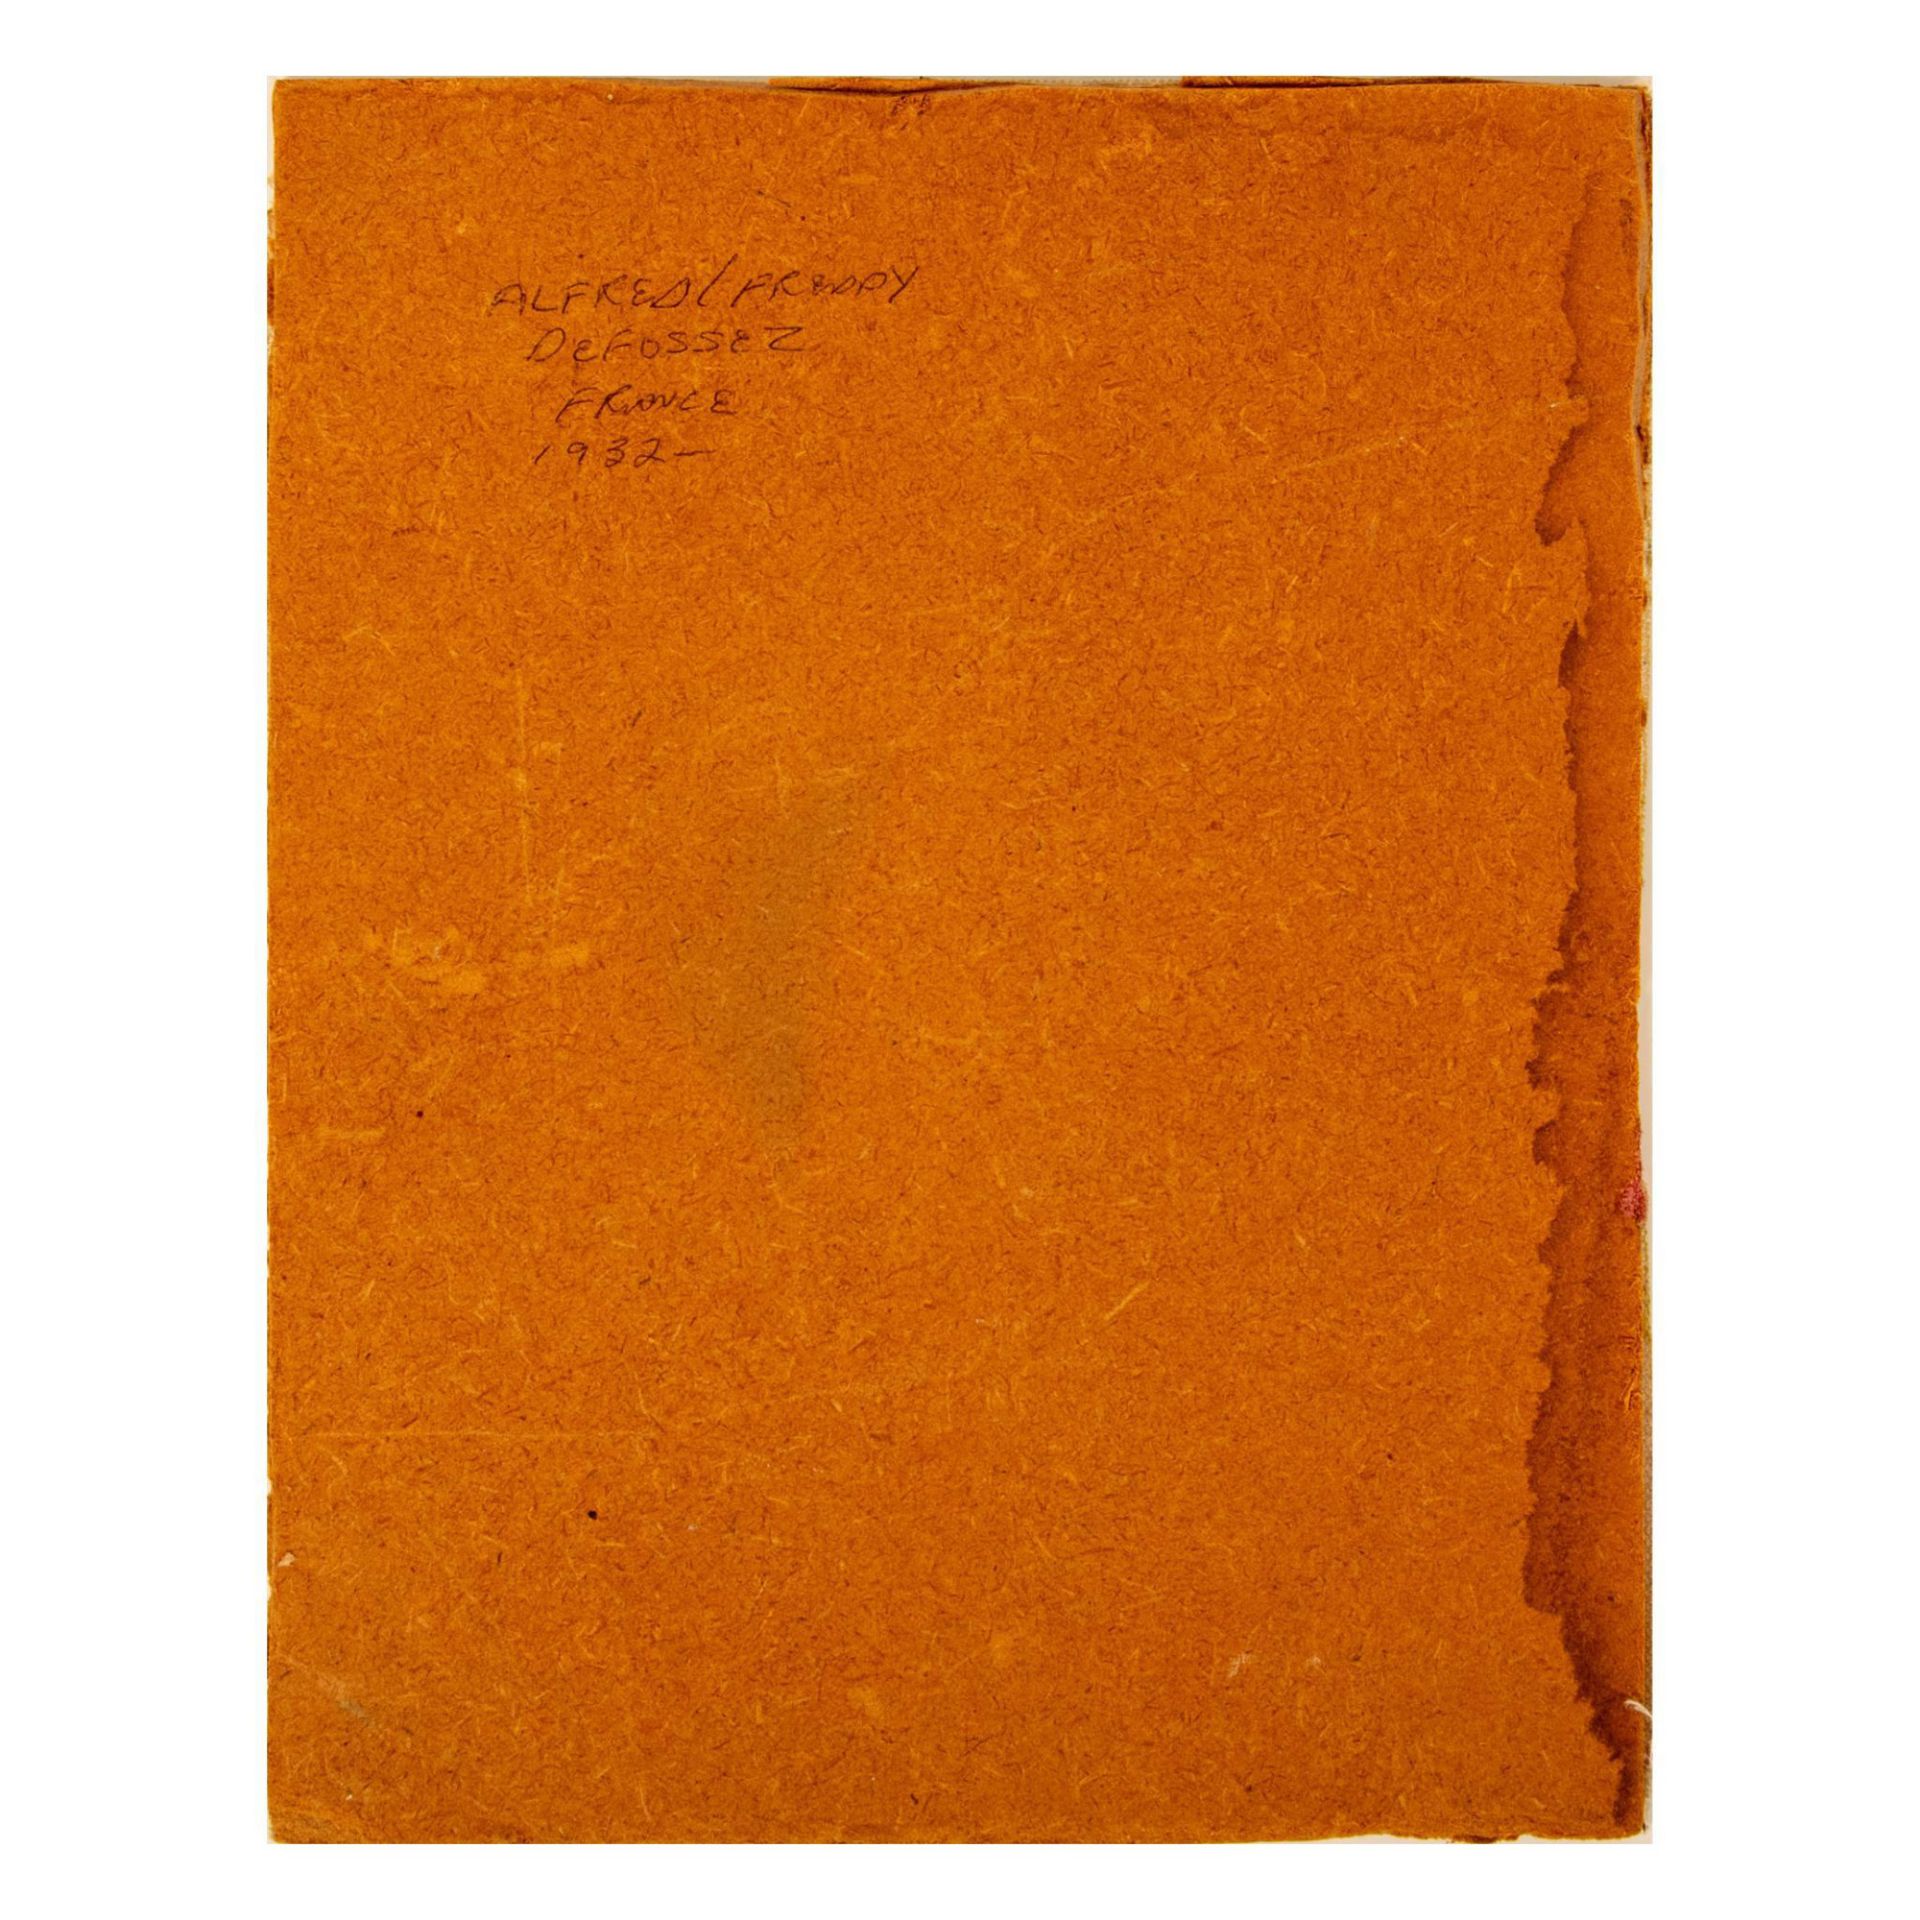 Defossez, Original Oil on Board, Portrait in Red, Signed - Image 4 of 5